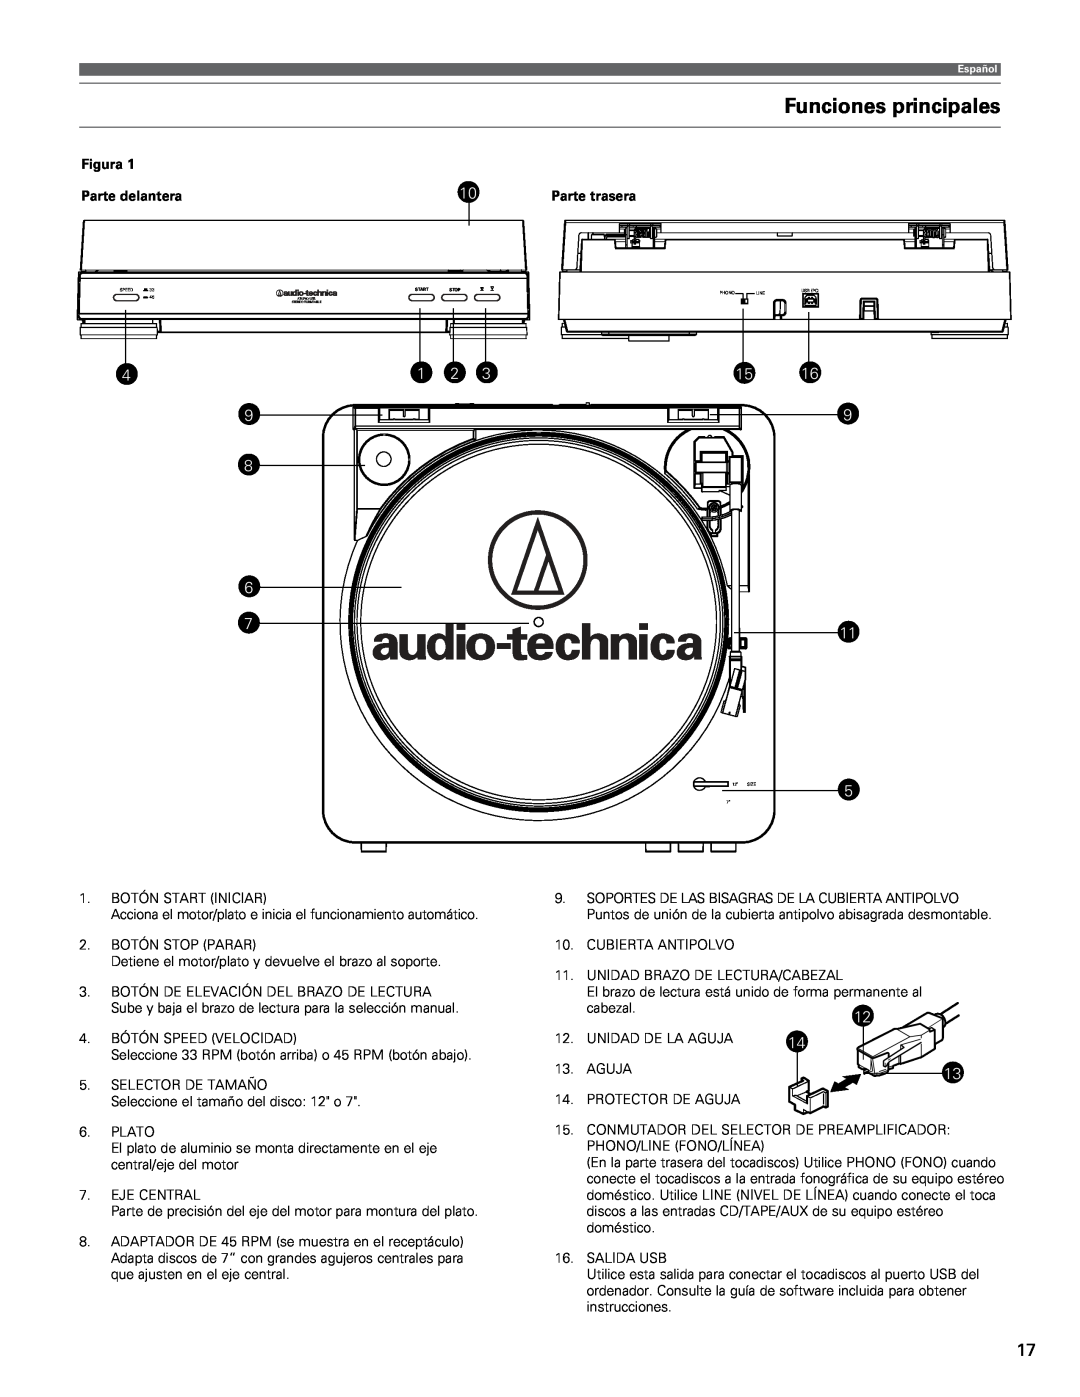 Audio-Technica AT-LP60-USB manual Funciones principales, Figura, Parte delantera 